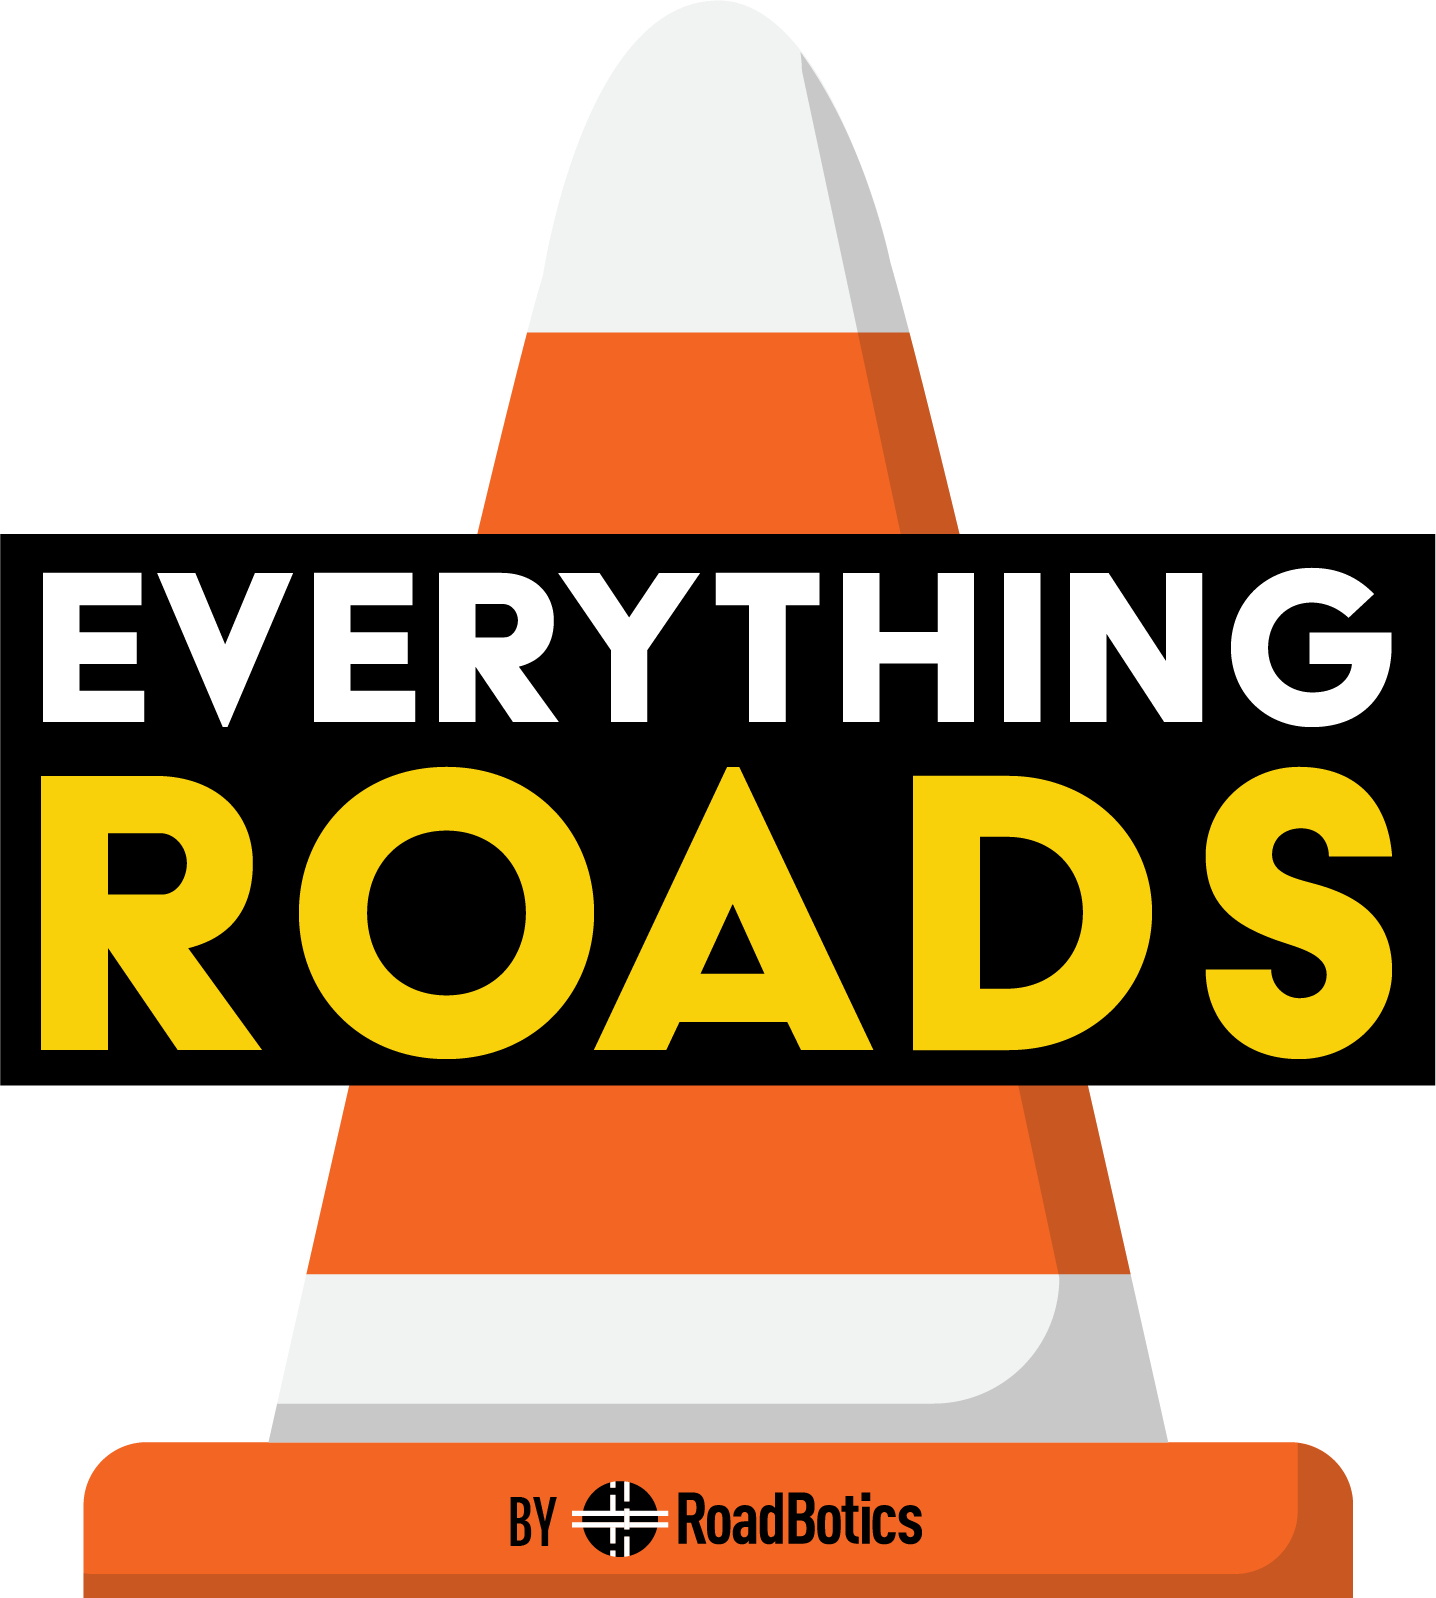 Everythingroads By Roadbotics Everythingroads By Roadbotics - Keep Calm And Never Say (1436x1598)